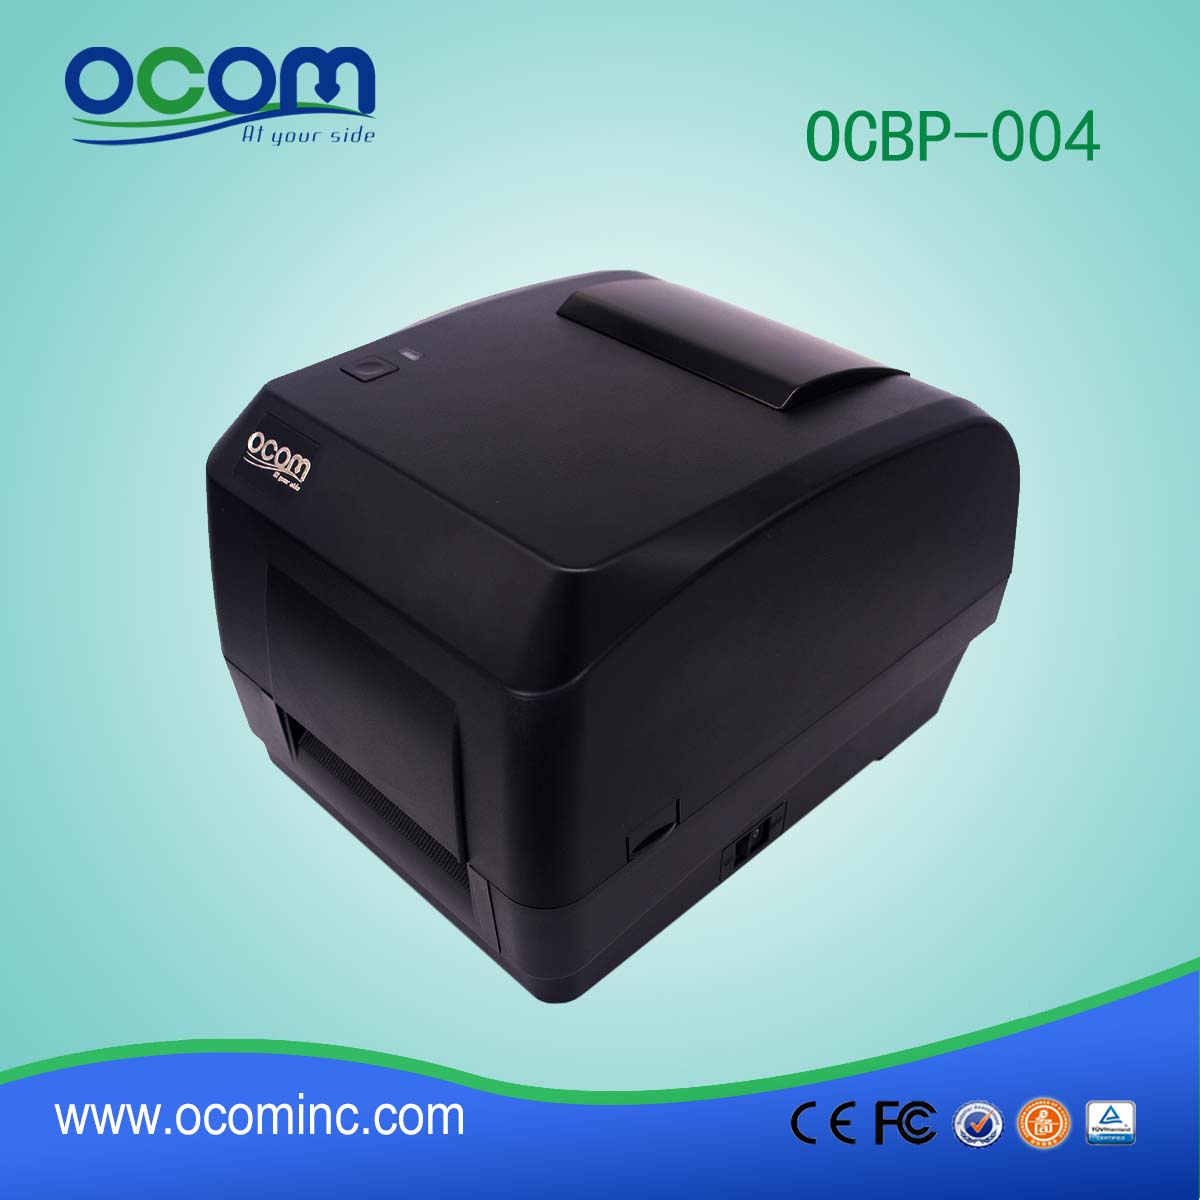 OCBP-004B-L 300DPI Термоперенос и прямой термокардиограф